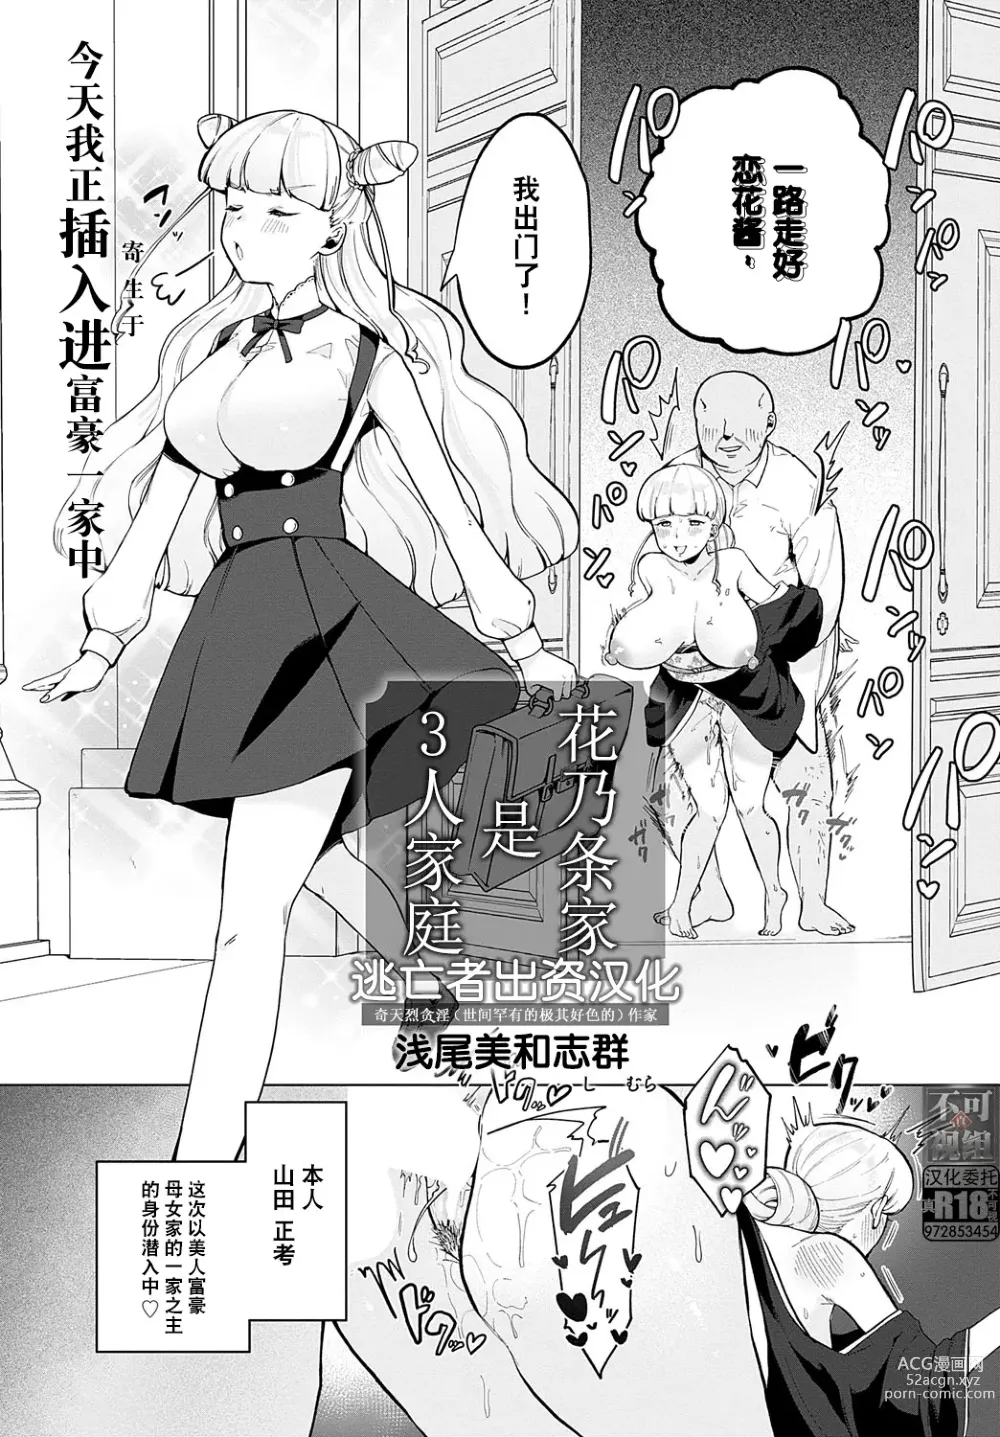 Page 2 of manga 花乃条家是3人家庭